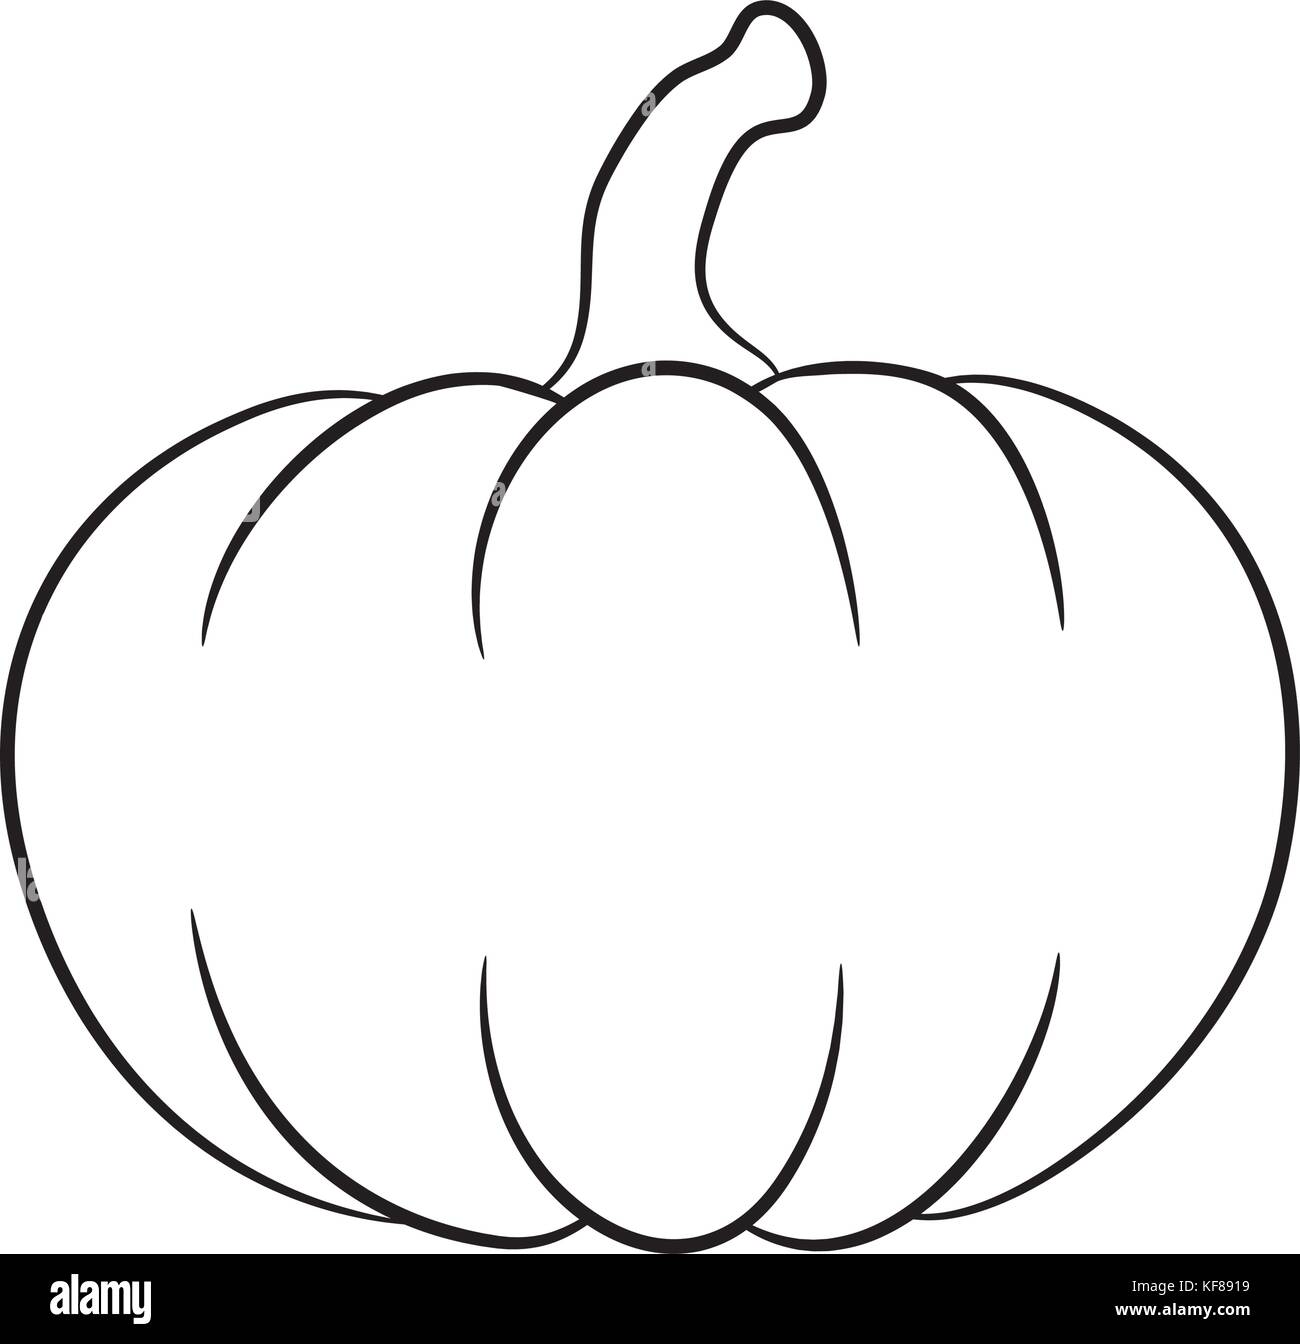 pumpkin outline vector design isolated on white background Stock Vector ...